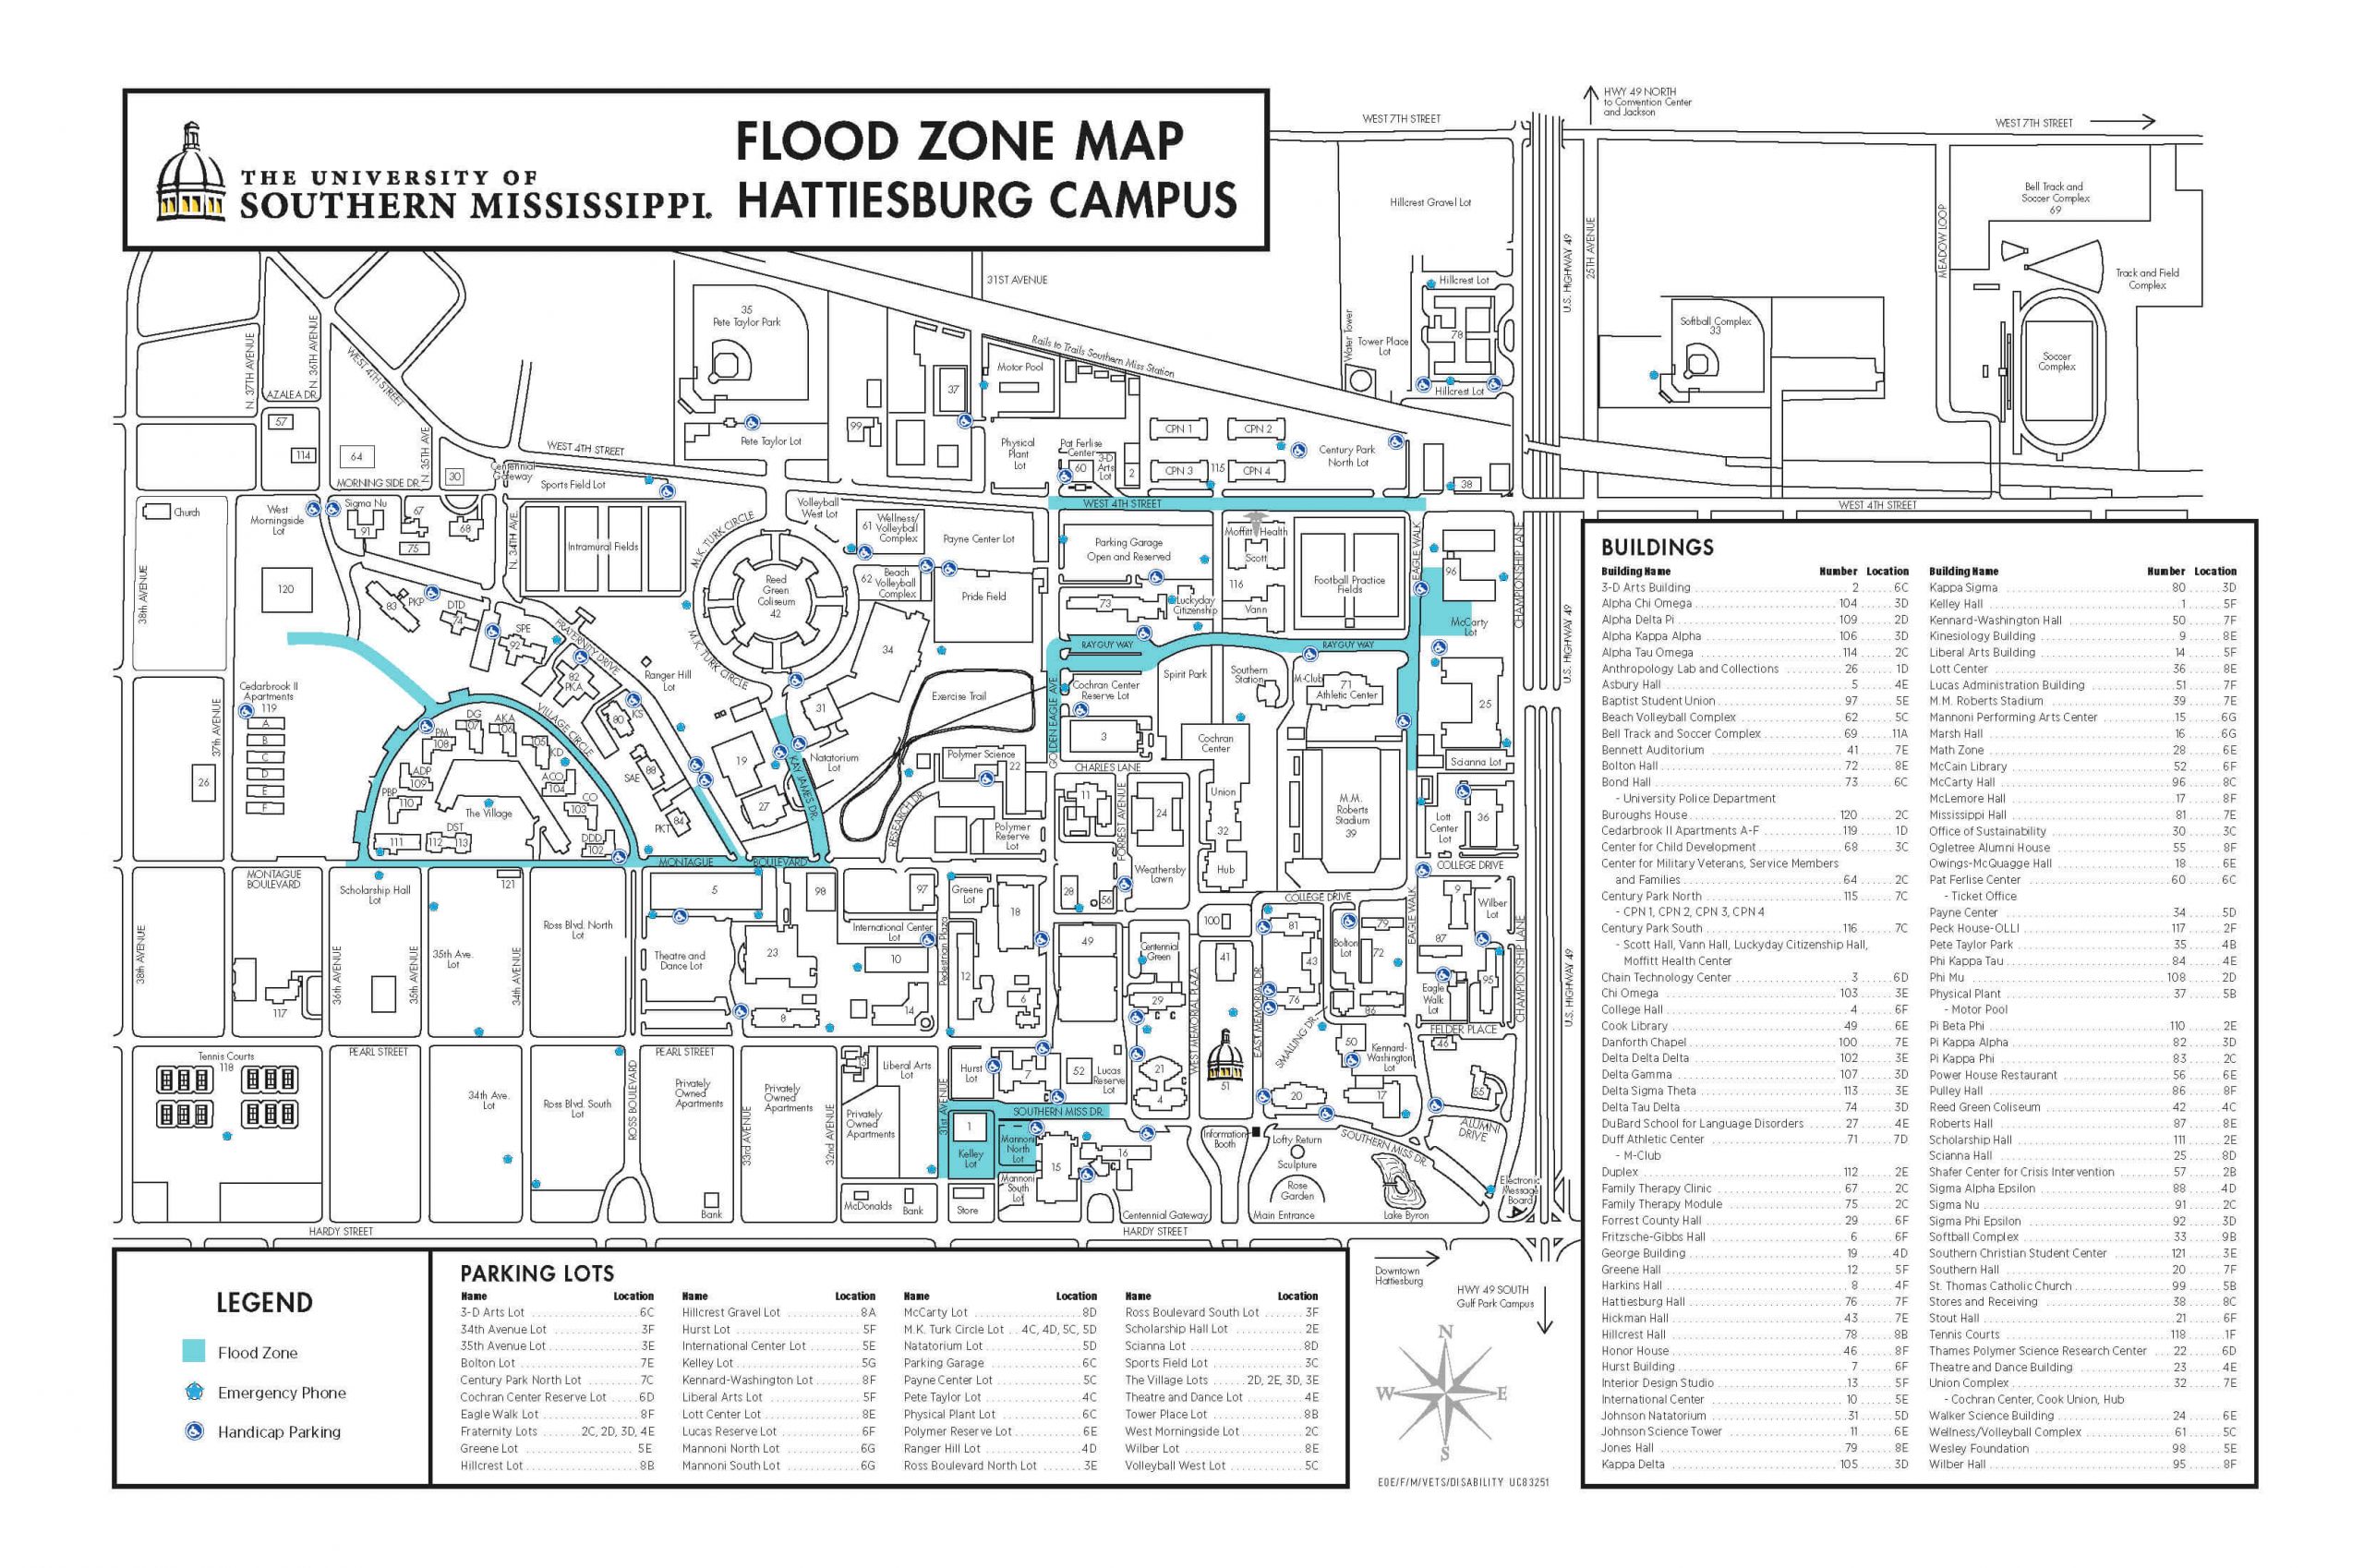 Flood zones on the Hattiesburg campus